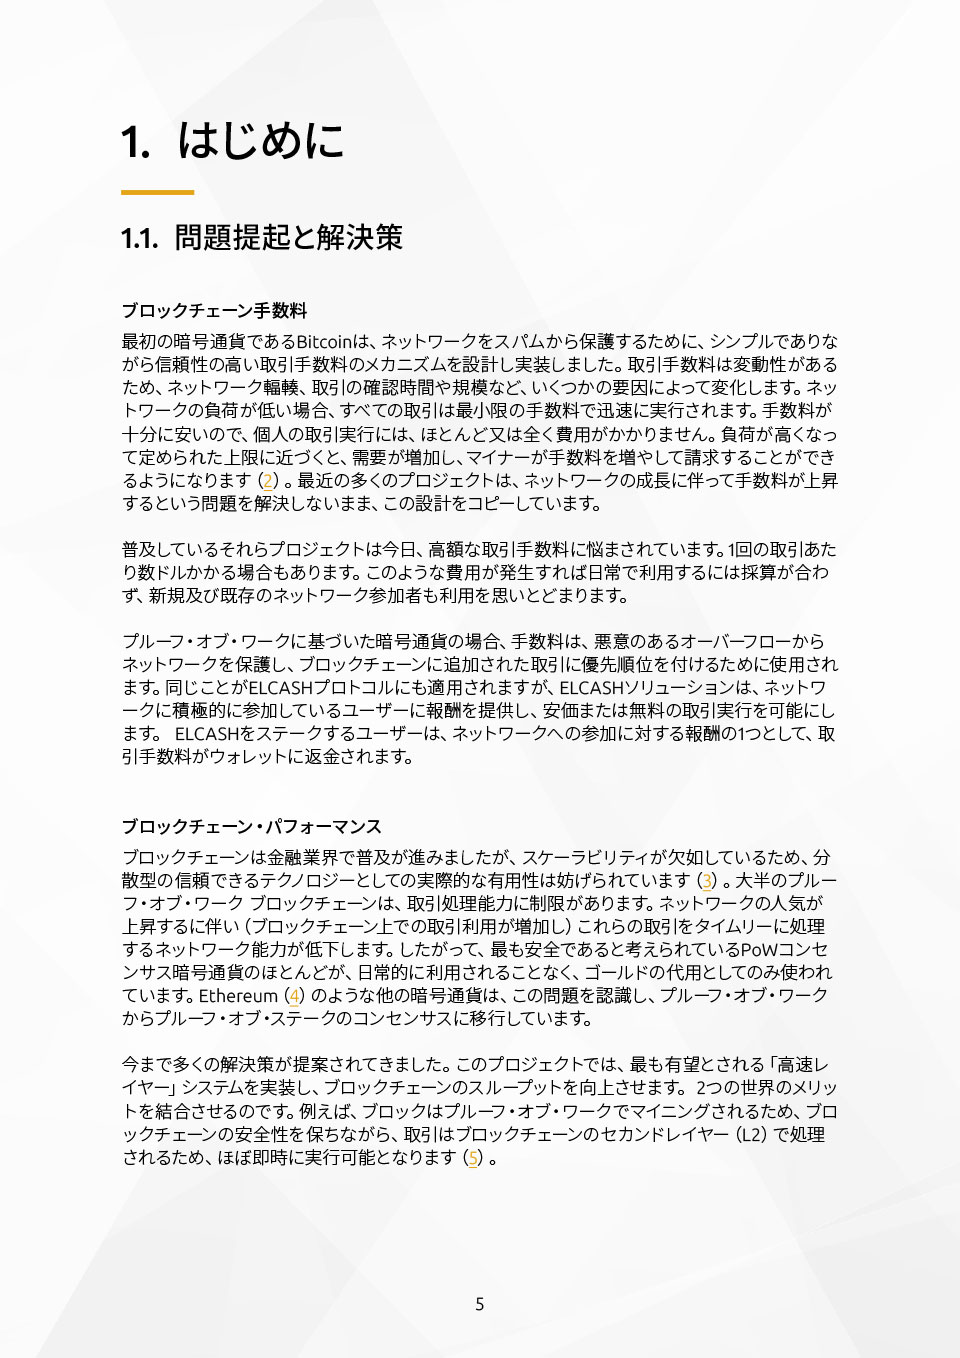 Strona dokumentu po japońsku